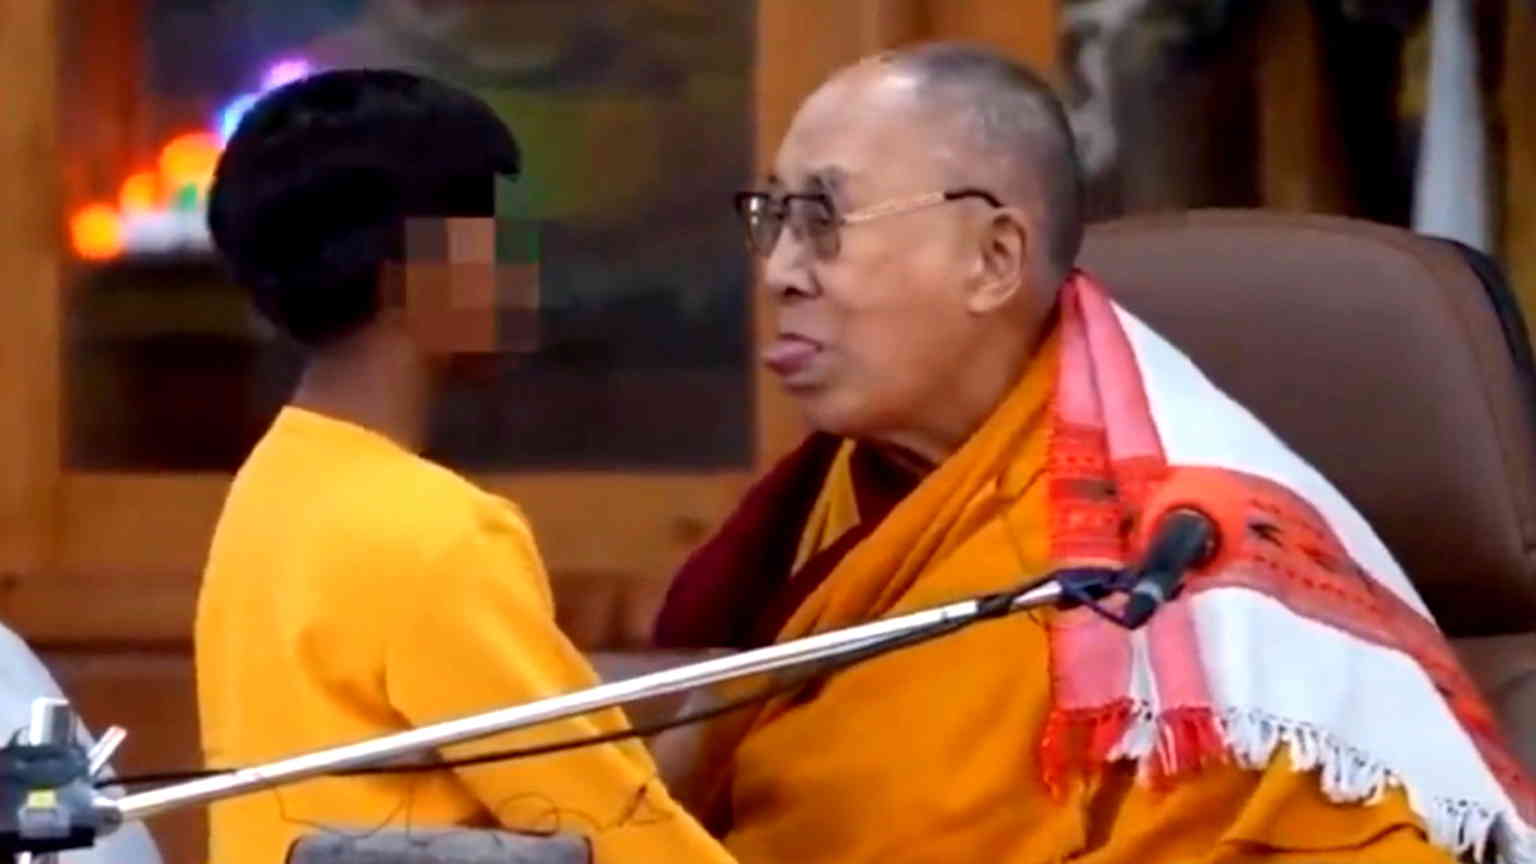 Tibetans say Dalai Lama’s ‘suck my tongue’ incident was misrepresented by CCP propagandists